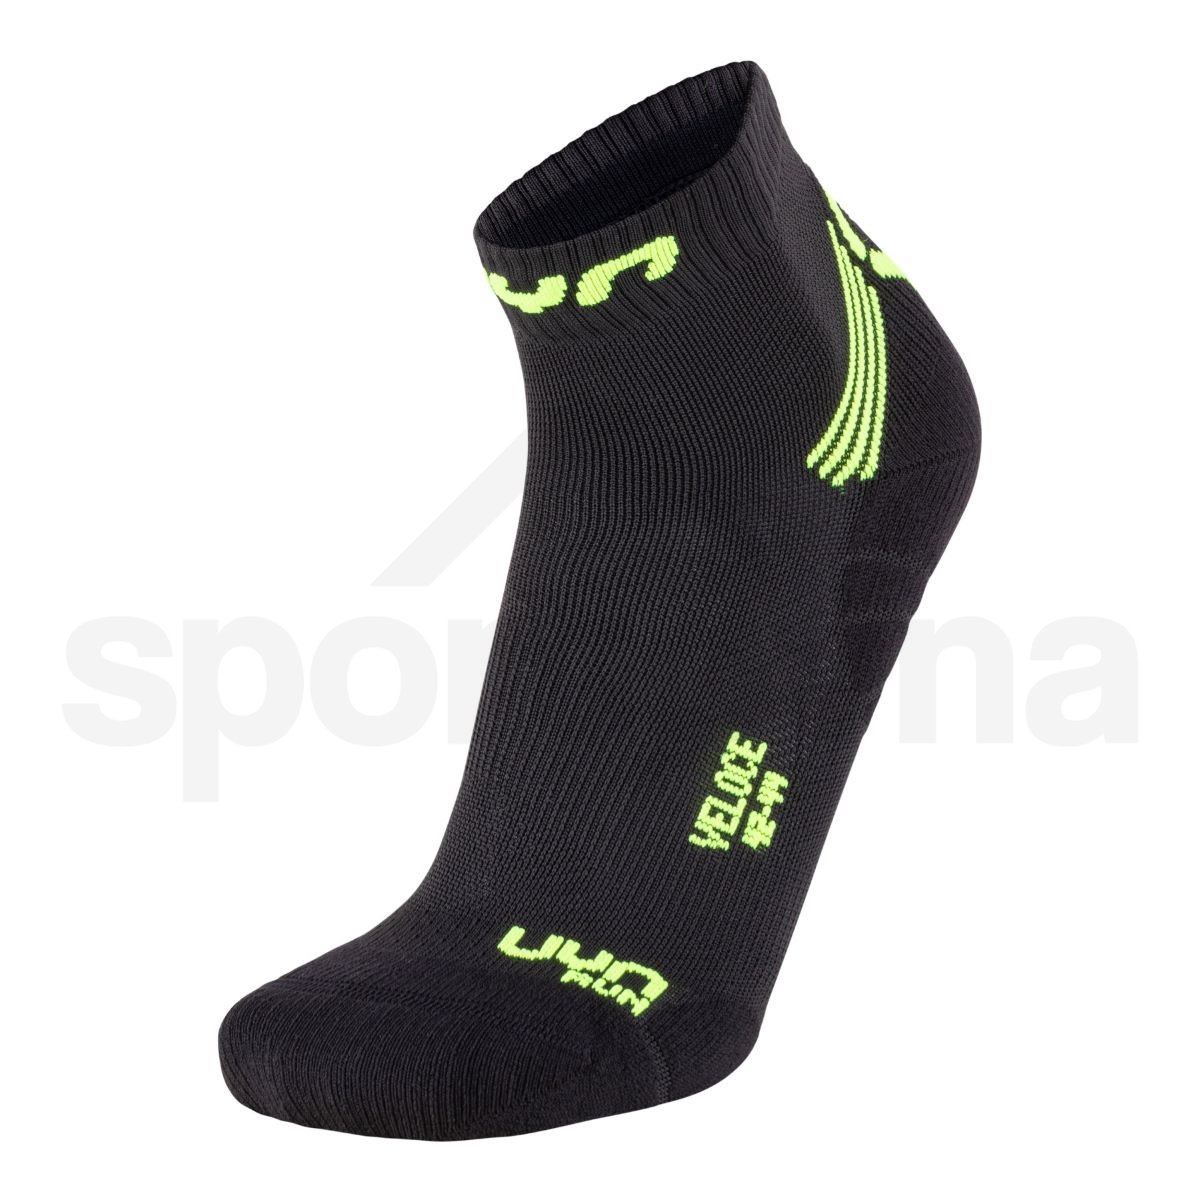 uyn-run-veloce-socks-black-yellow-fluo-1-1306795